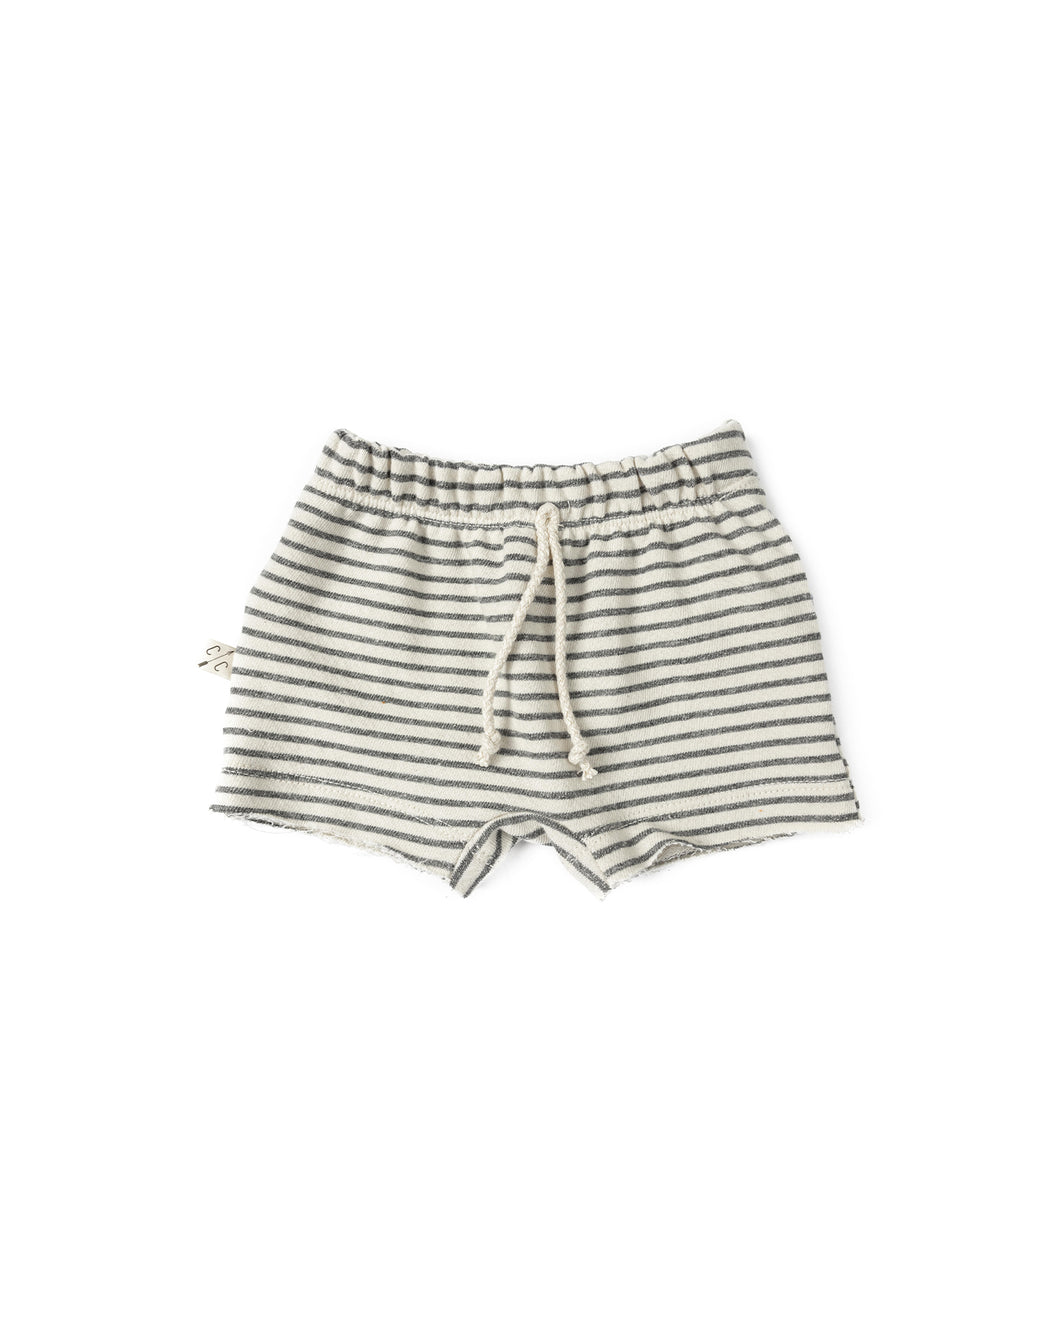 boy shorts - narrow gray stripe